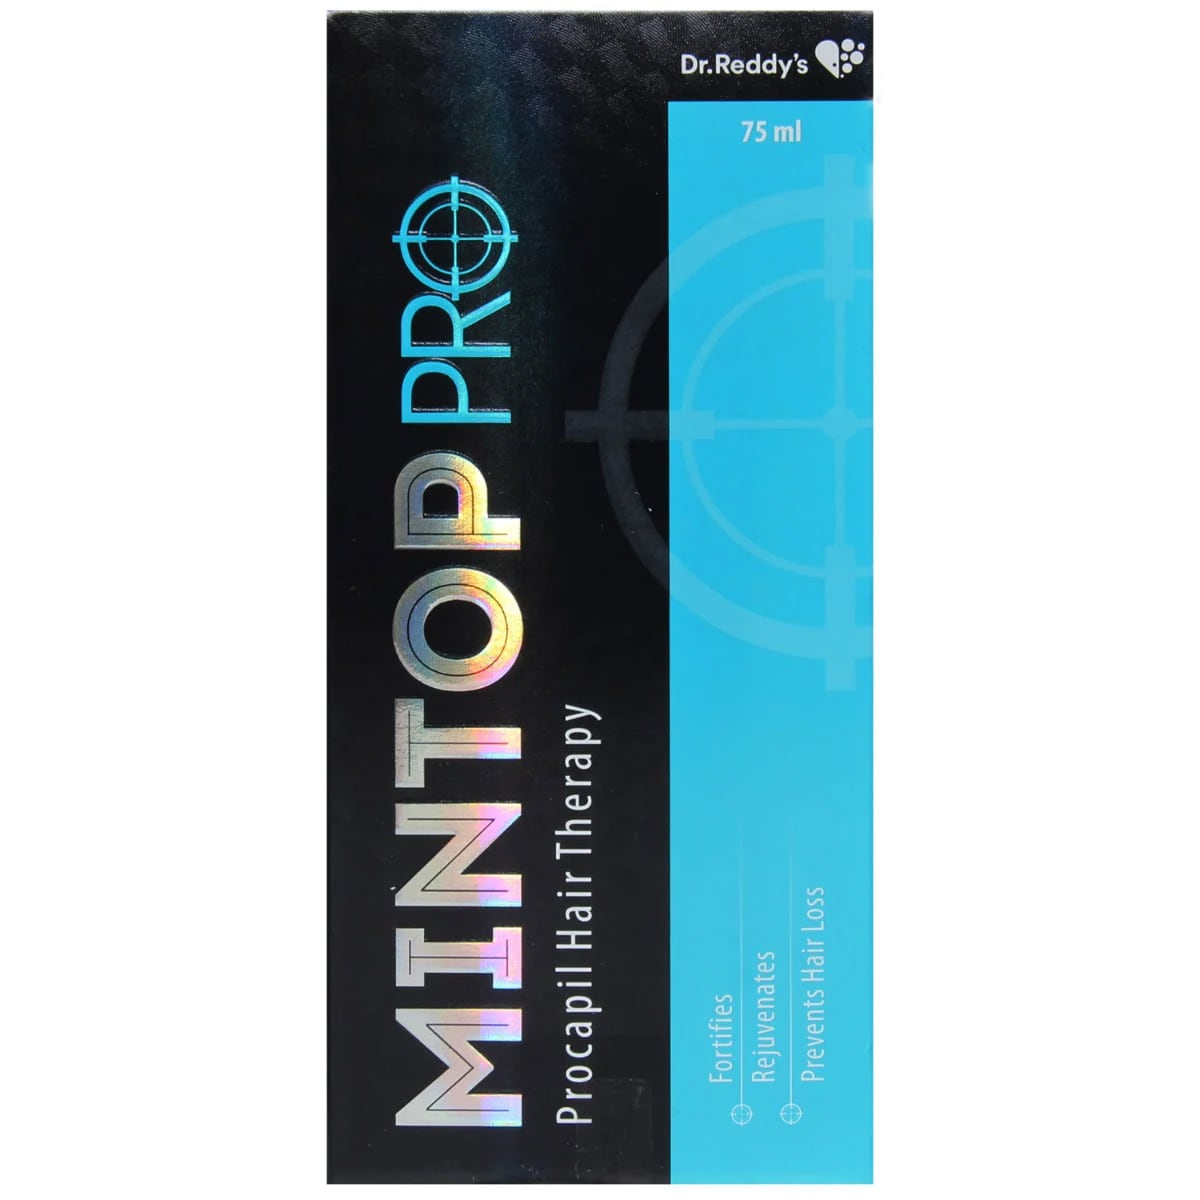 Mintop Pro Liquid, 75 ml, Pack of 1 